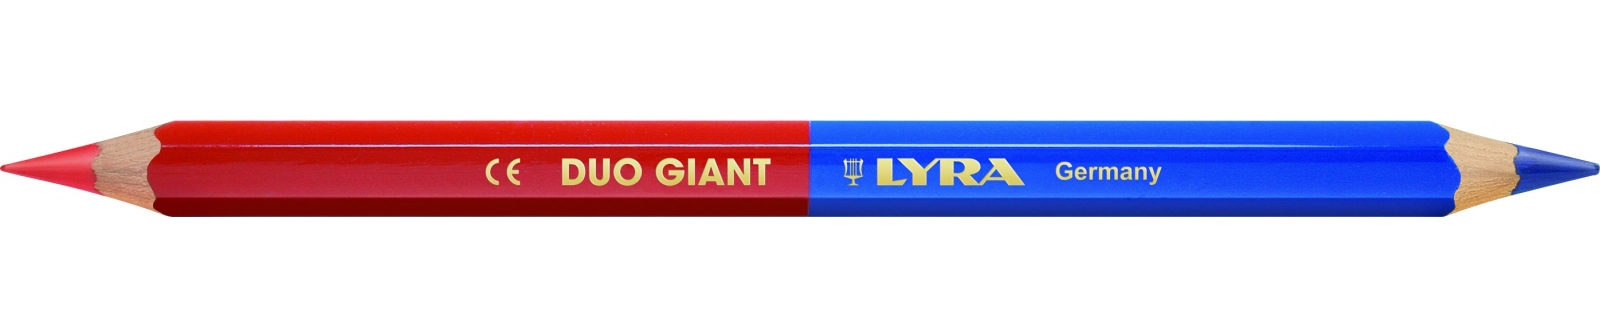 pics/Lyra 2016/2930101-lyra-duo-giant-bleistift-beidseitig-angespitz-2-farbig-rot-und-blau.jpg